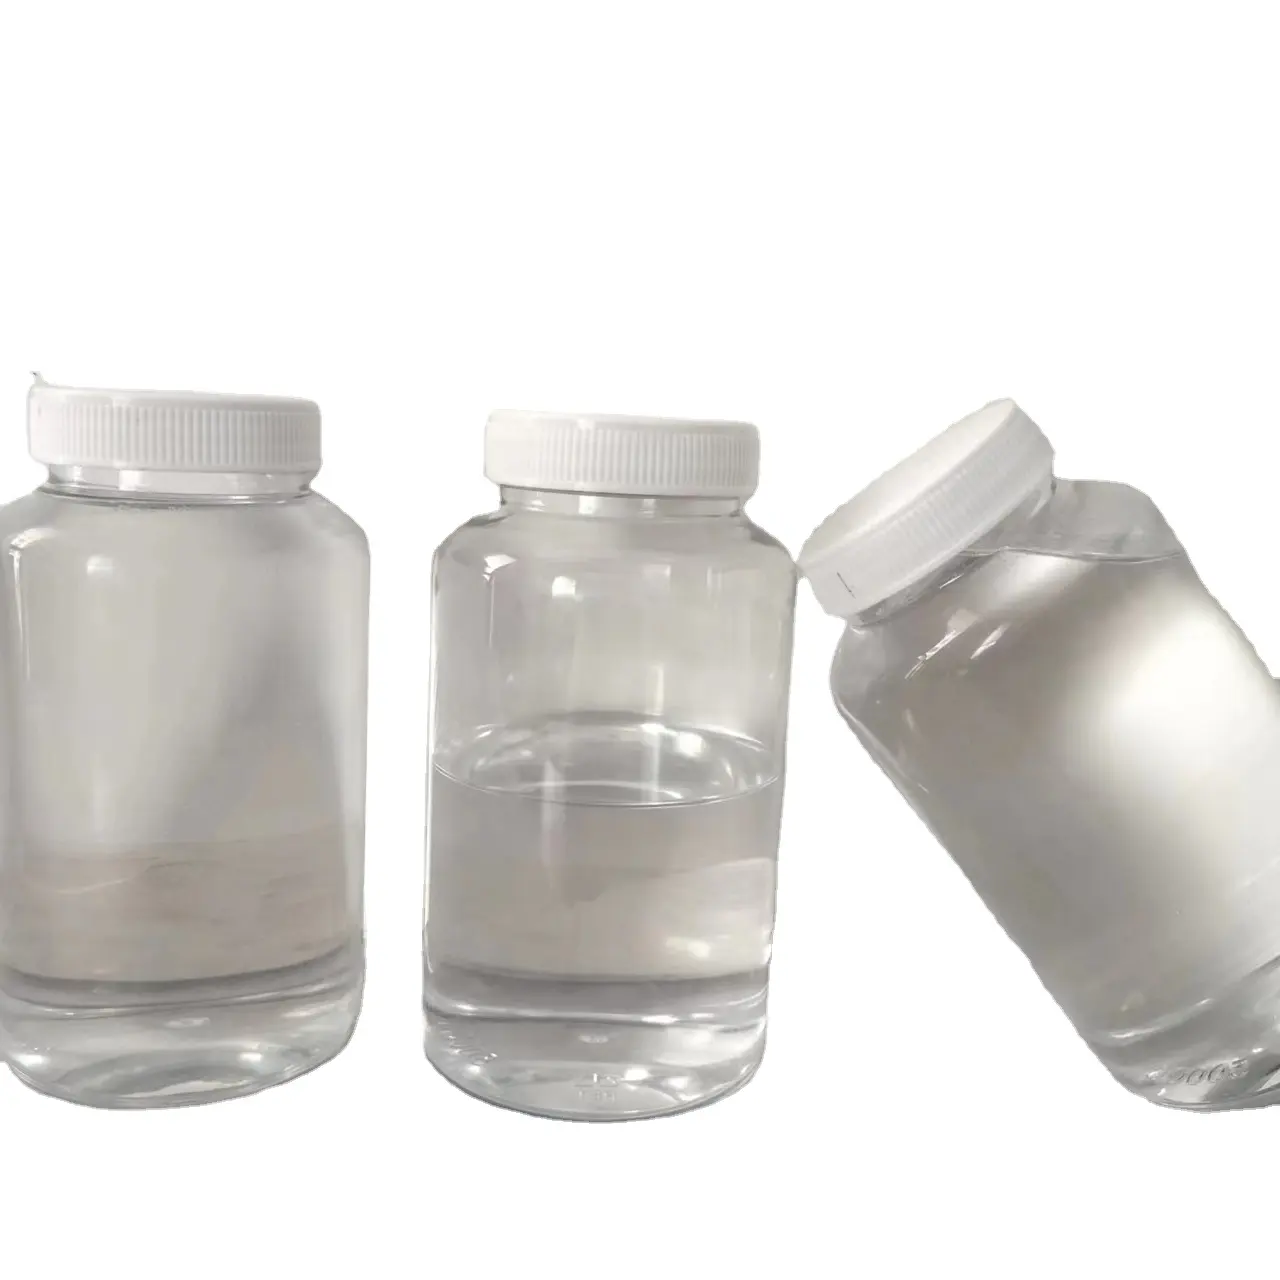 Zinca ChemChina suministra aceite de silicona amino y aceite de silicona modificado amino y aceite de silicona amino a base de agua